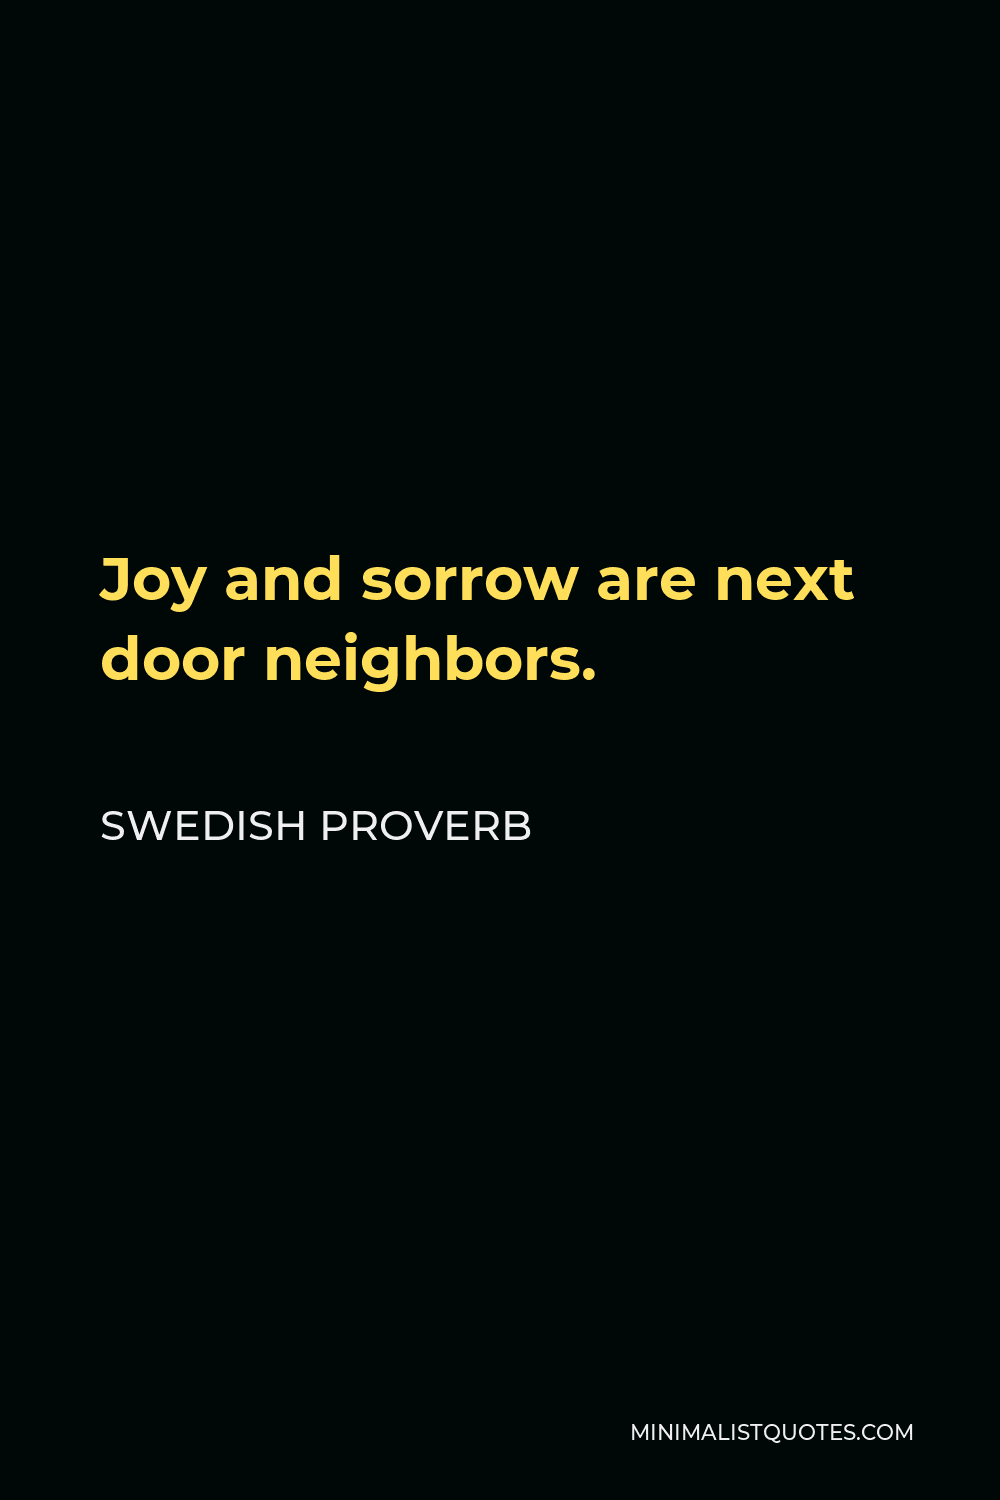 Swedish Proverb Quote - Joy and sorrow are next door neighbors.